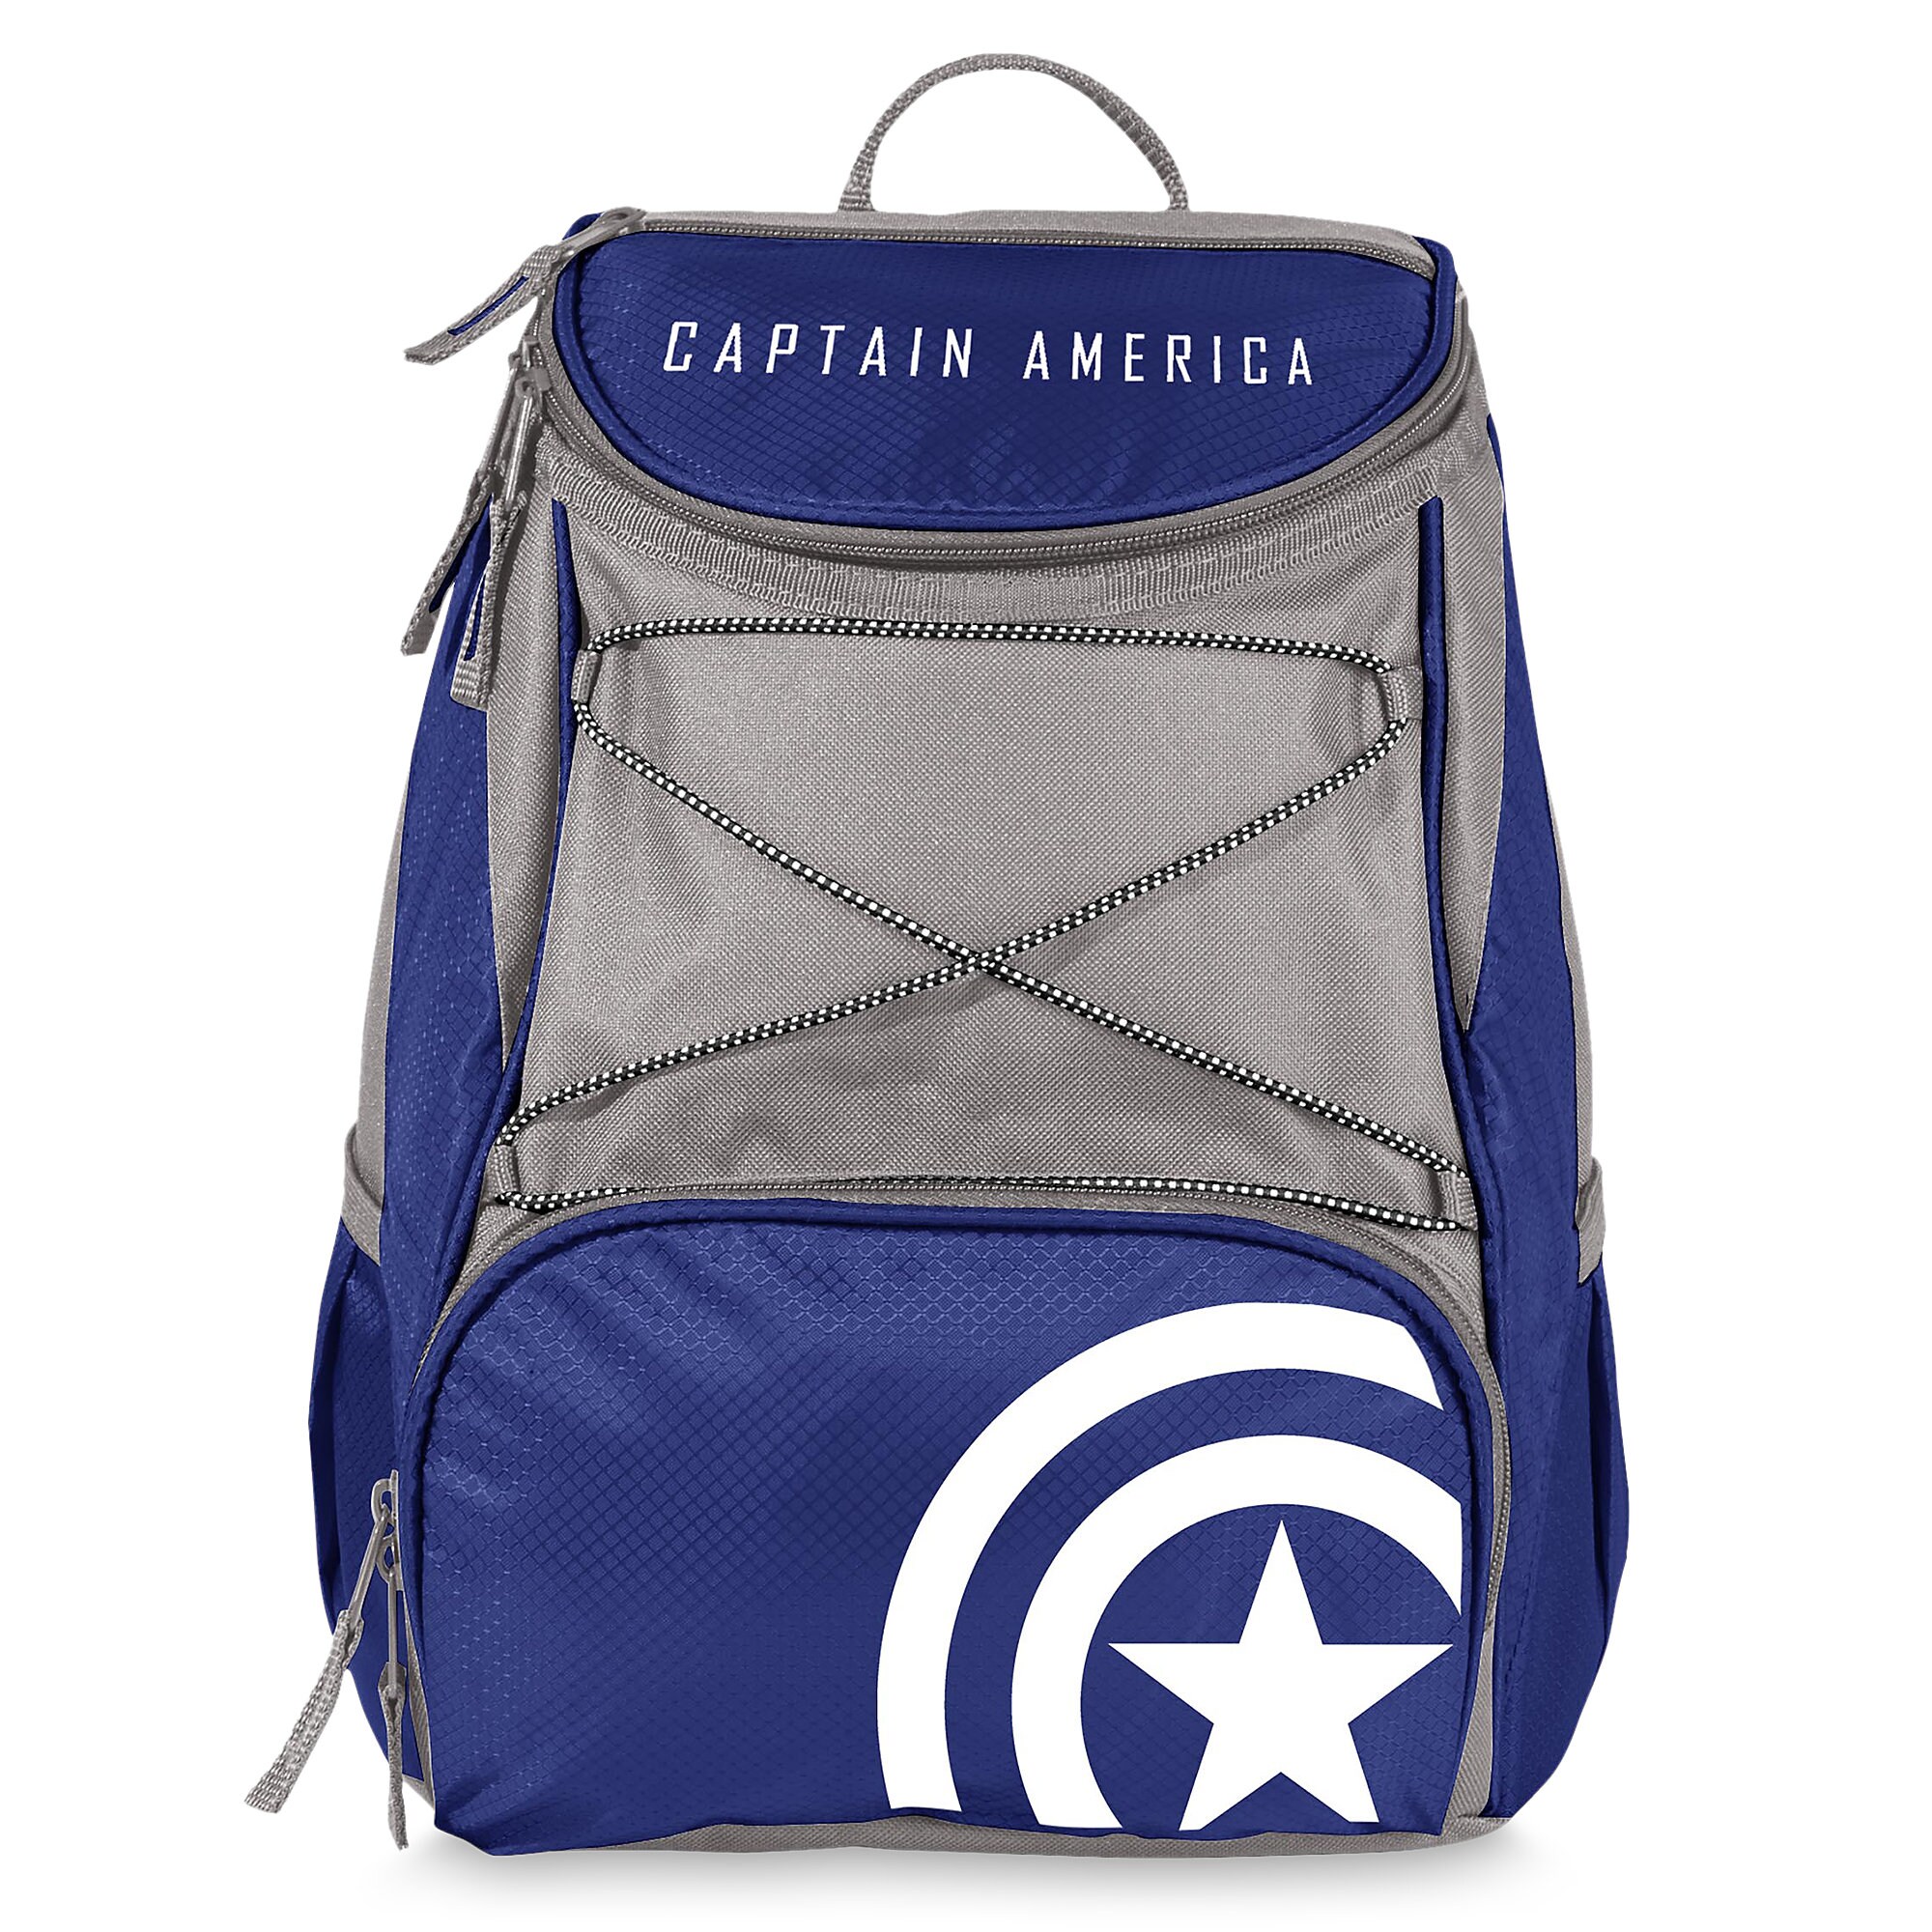 Captain America Cooler Backpack